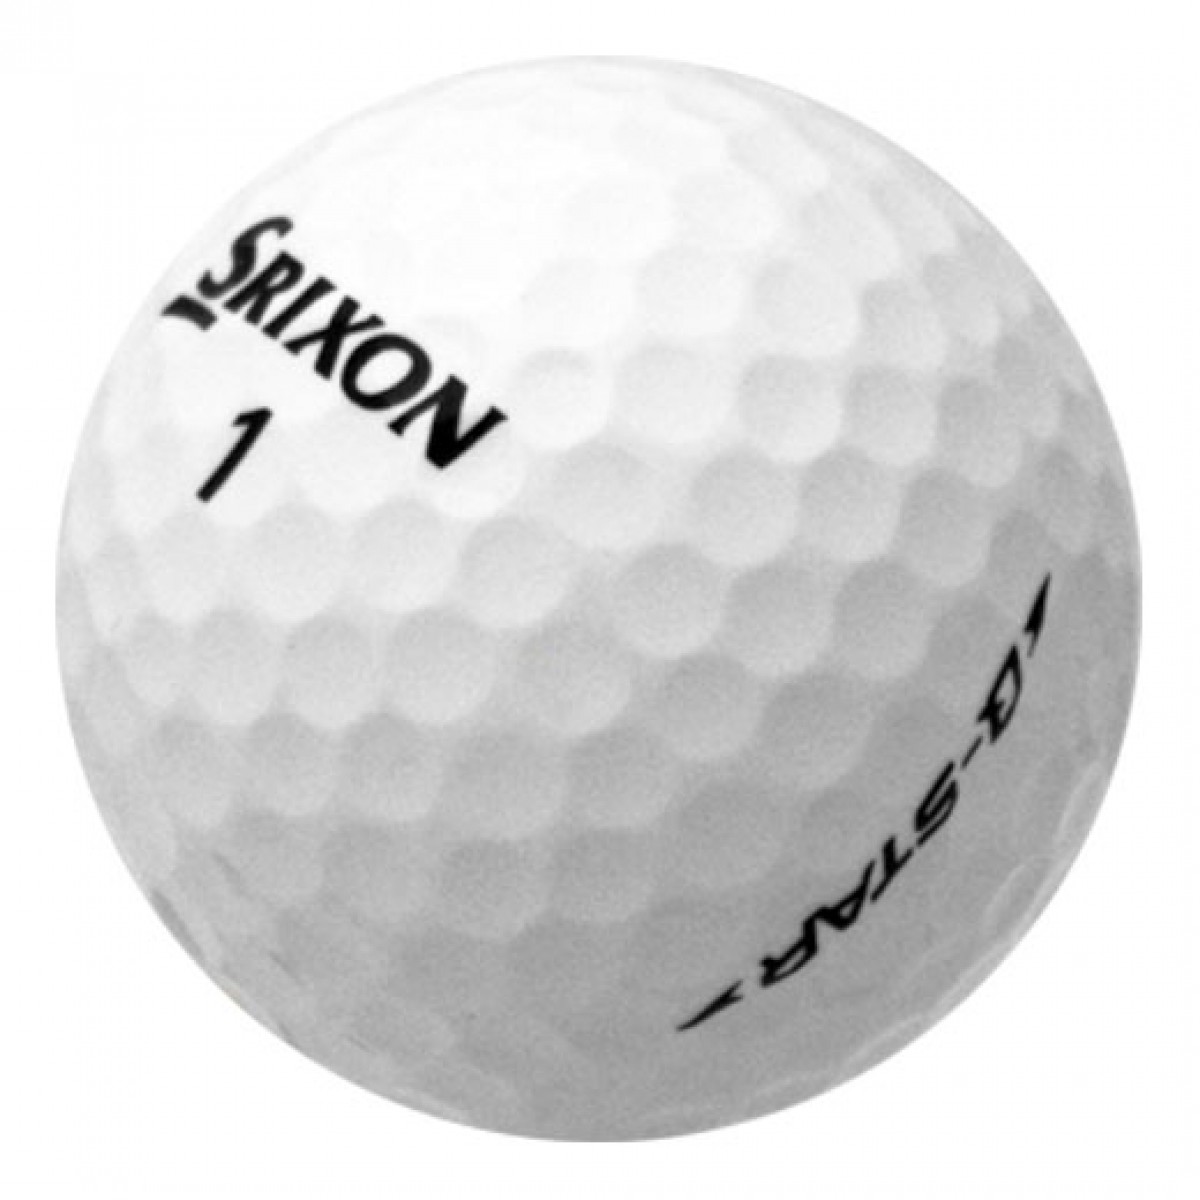 Srixon Q-Star Golf Balls, AAAA Quality, 30 Pack, by Hunter Golf - image 1 of 9